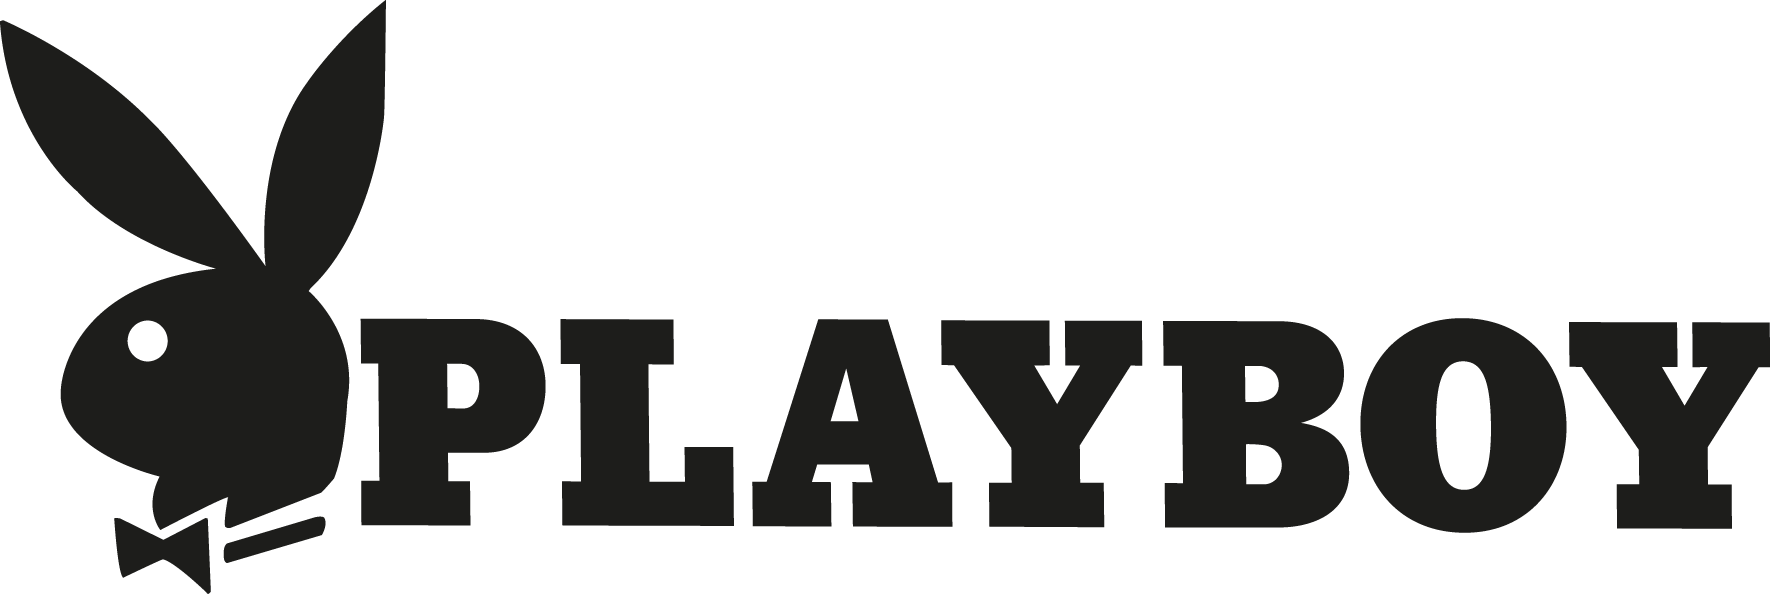 Logo Playboy.png - Playboy, Transparent background PNG HD thumbnail